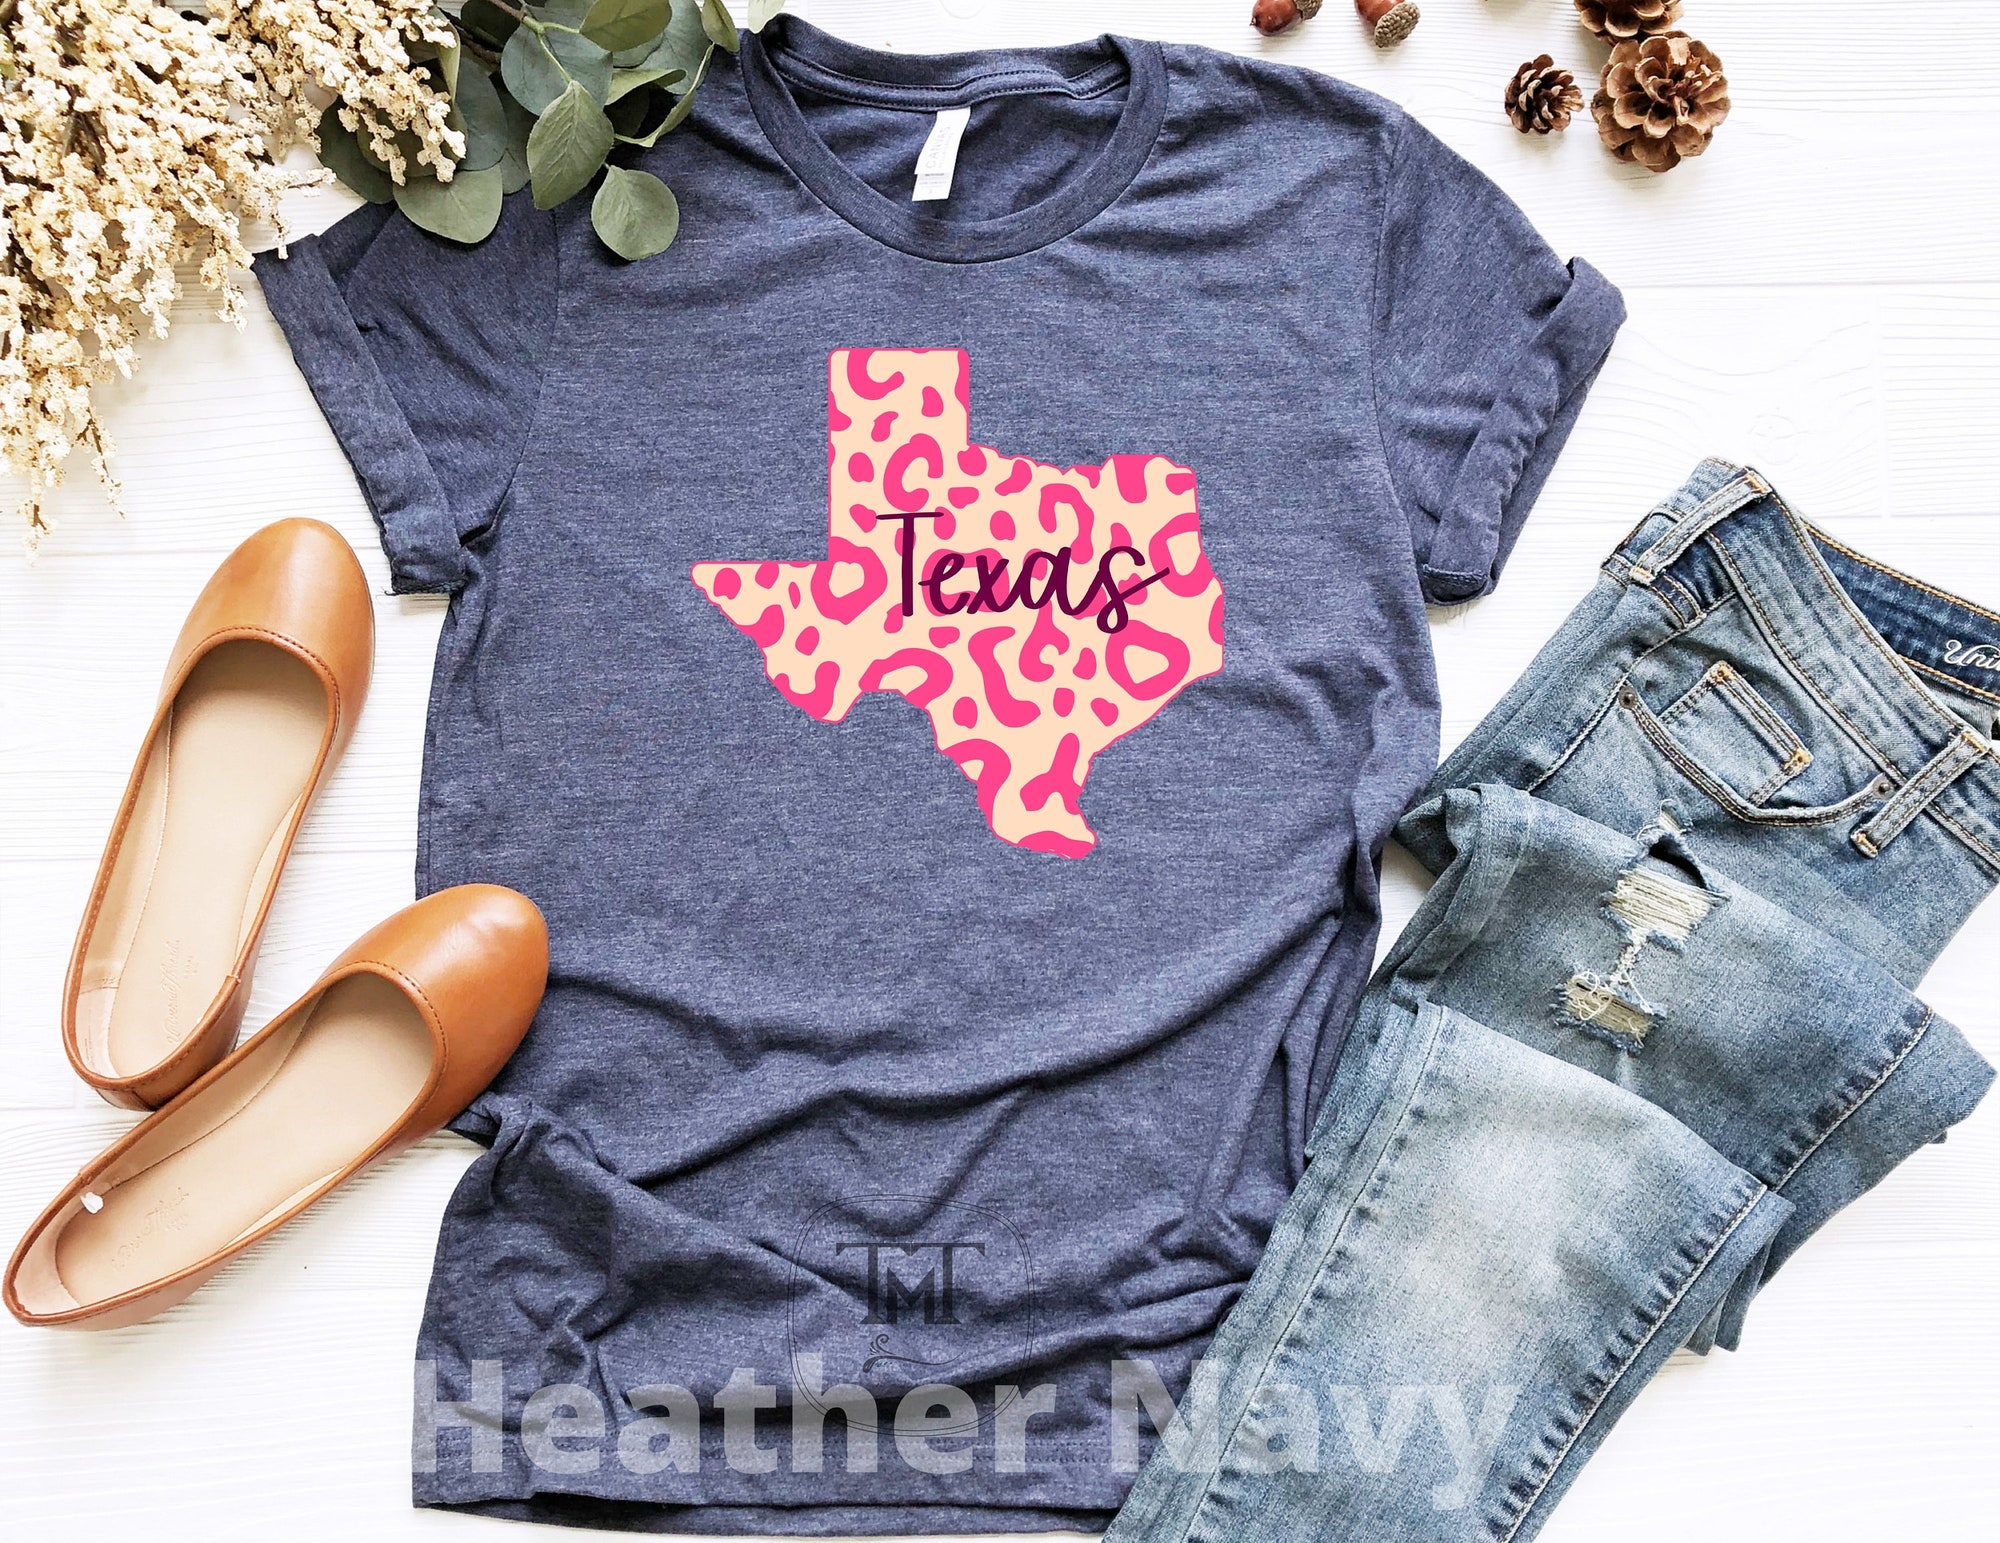 Discover Texas Map Shirt, Texas Shirt, Home State Shirt, Texas Leopard Shirt, Texas Graphic Tee, Texas T-Shirt, Texas State Shirt, Texas Pride Shirt